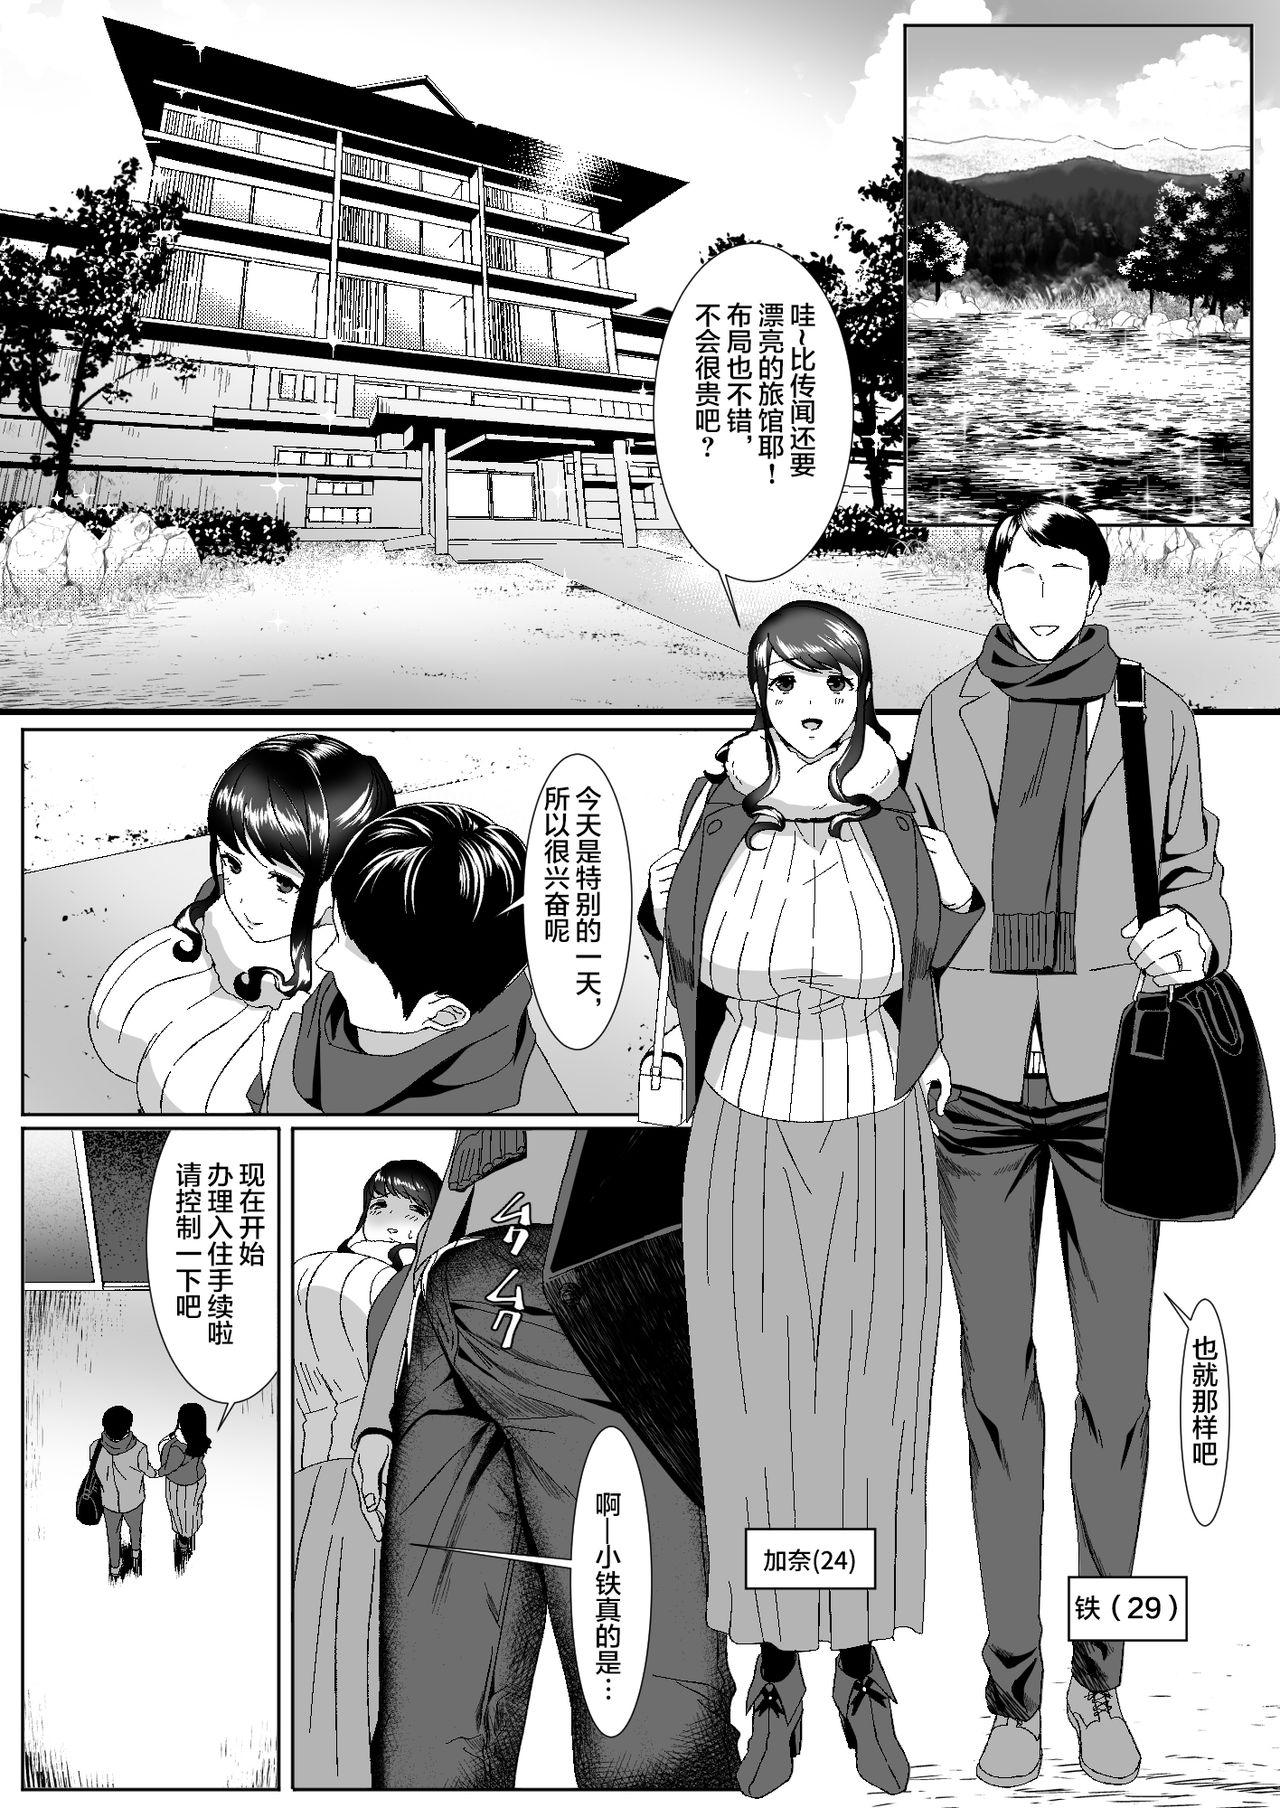 Nasty Niizuma Gari Curves - Page 3